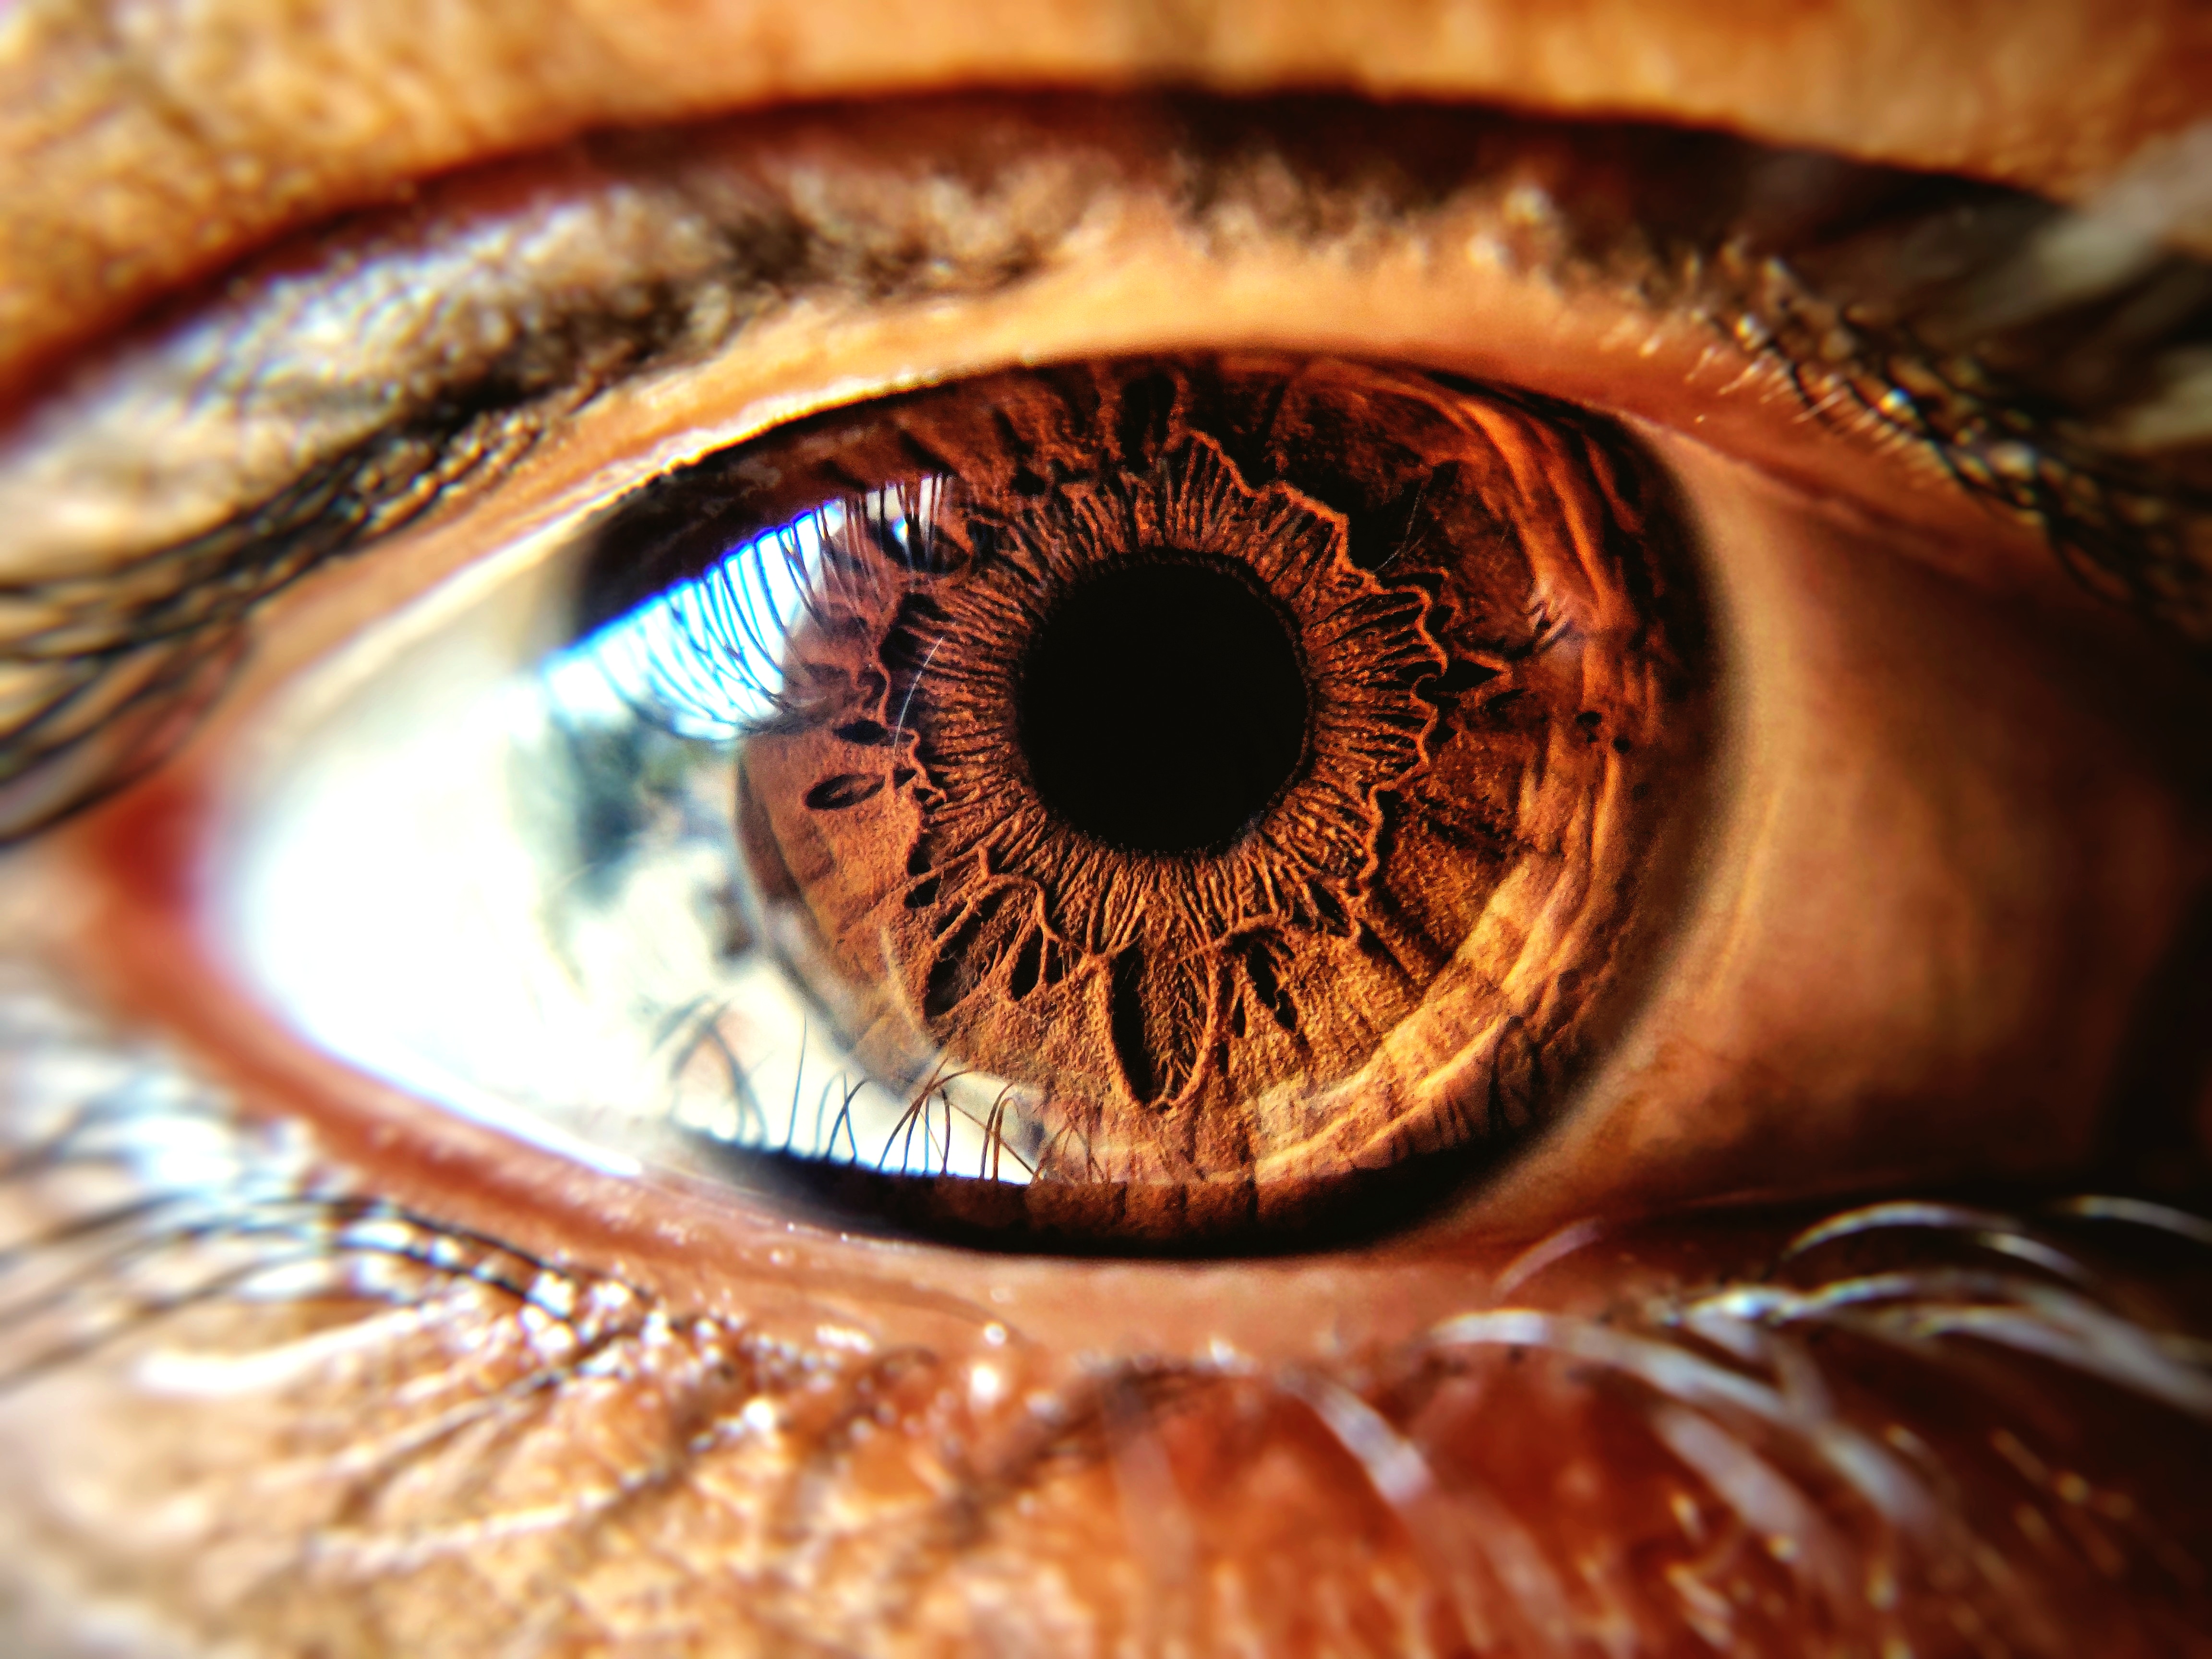 Extreme Close-Up Of Human Eye